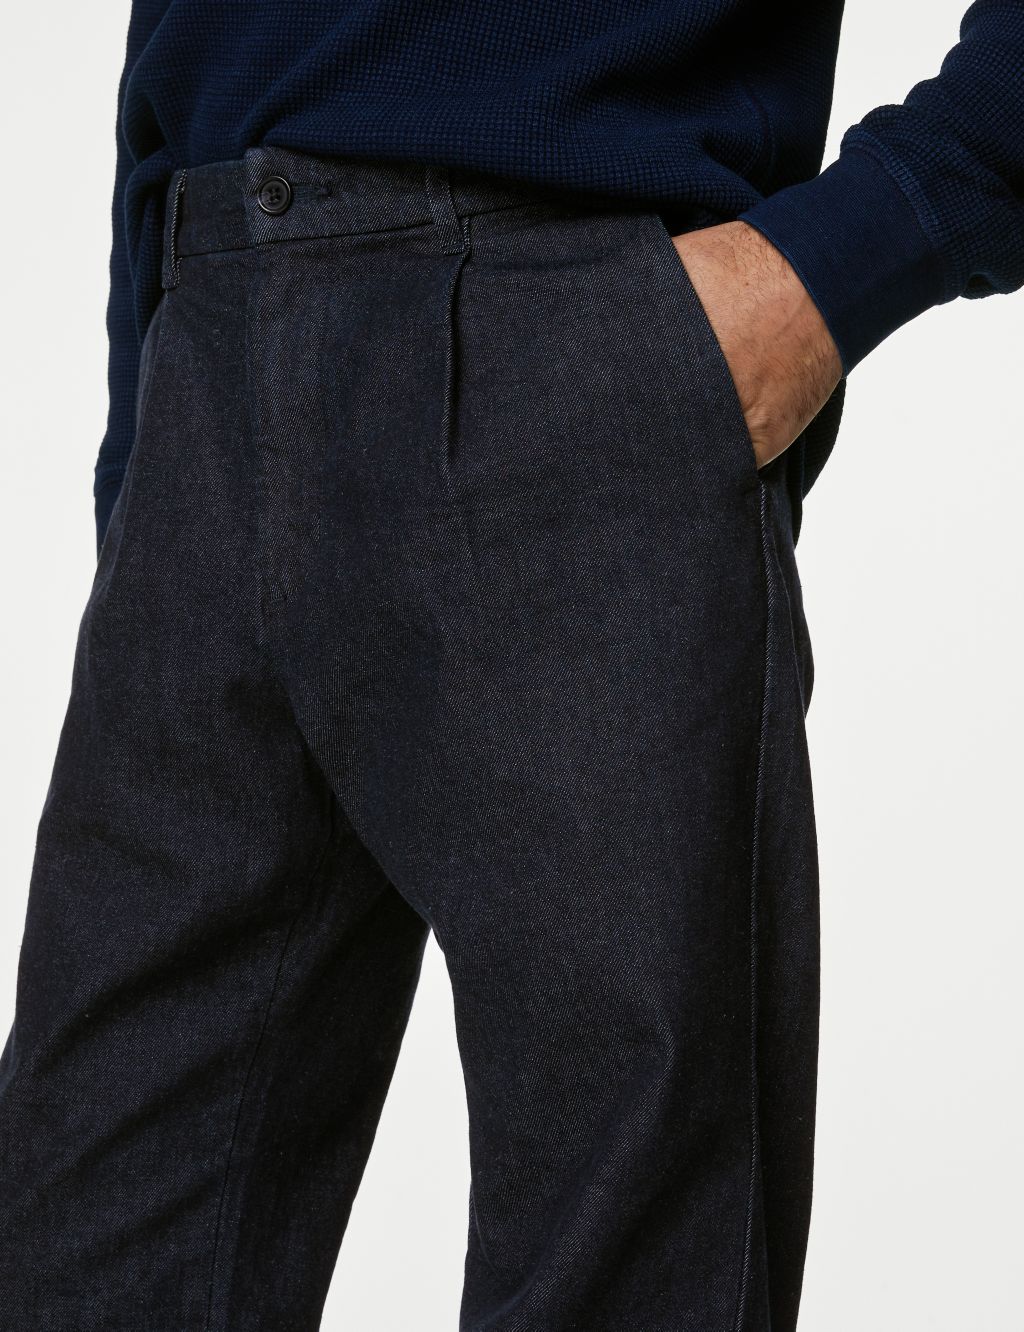 Barrel Fit Single Pleat Jeans image 4